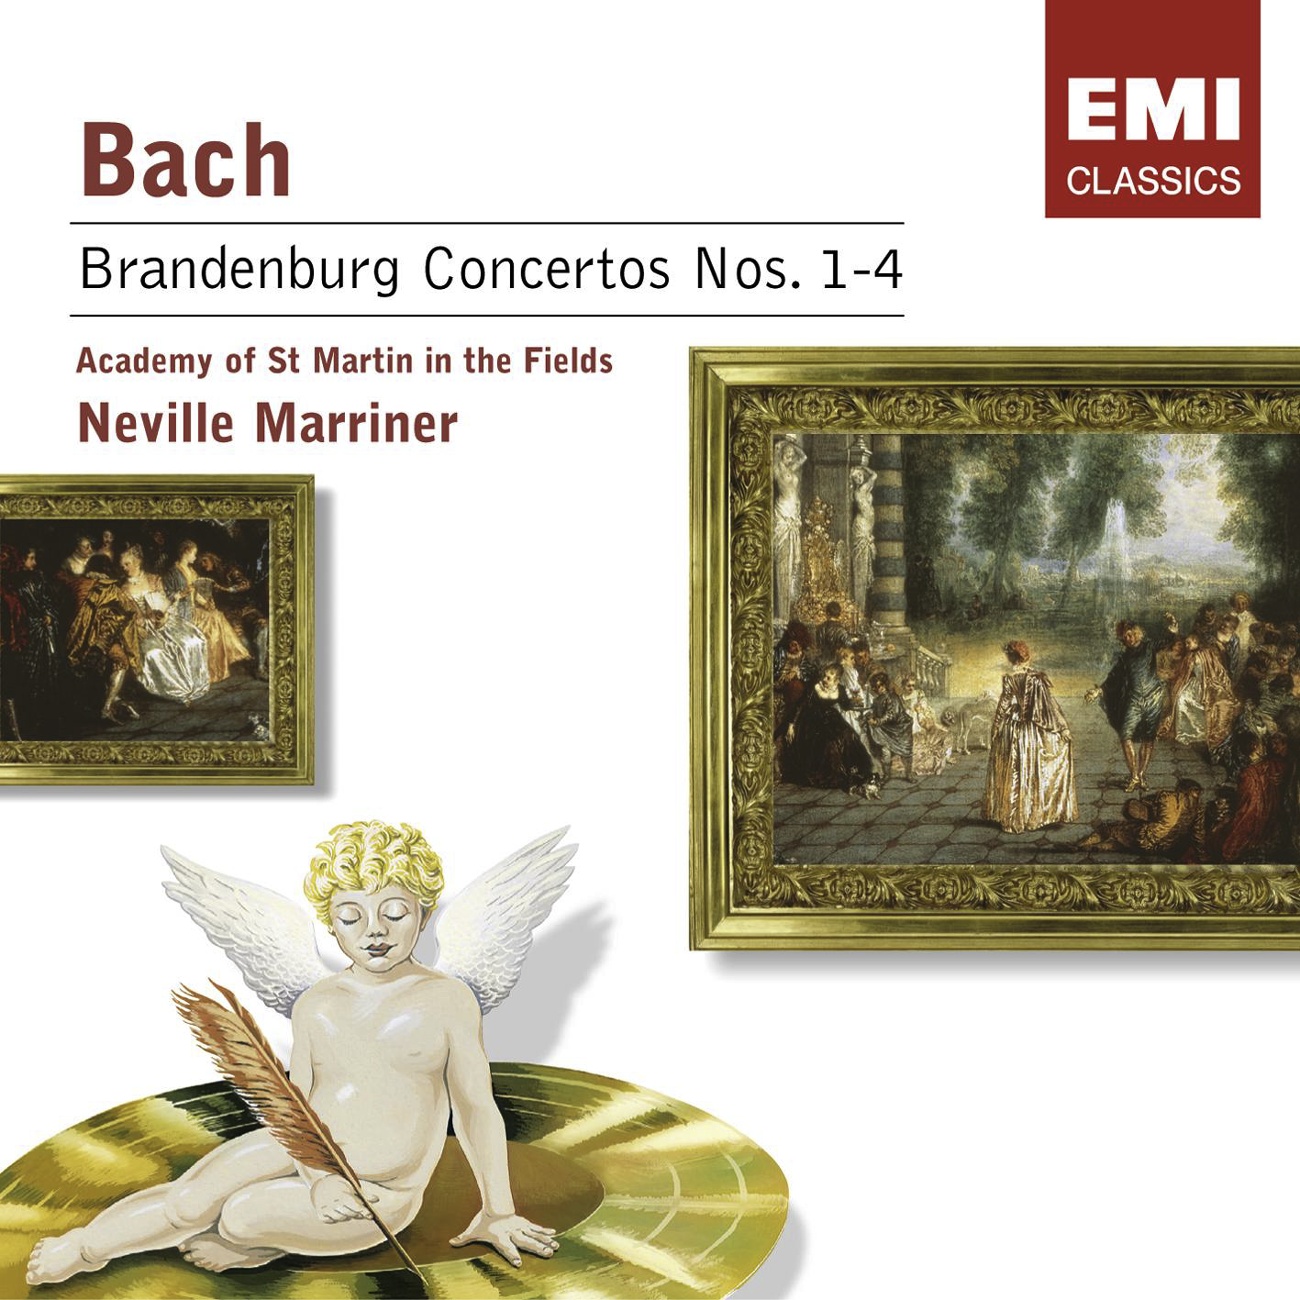 Brandenburg Concerto No. 1 in F, BWV 1046: IV. Menuet - Trio - Polacca - Trio